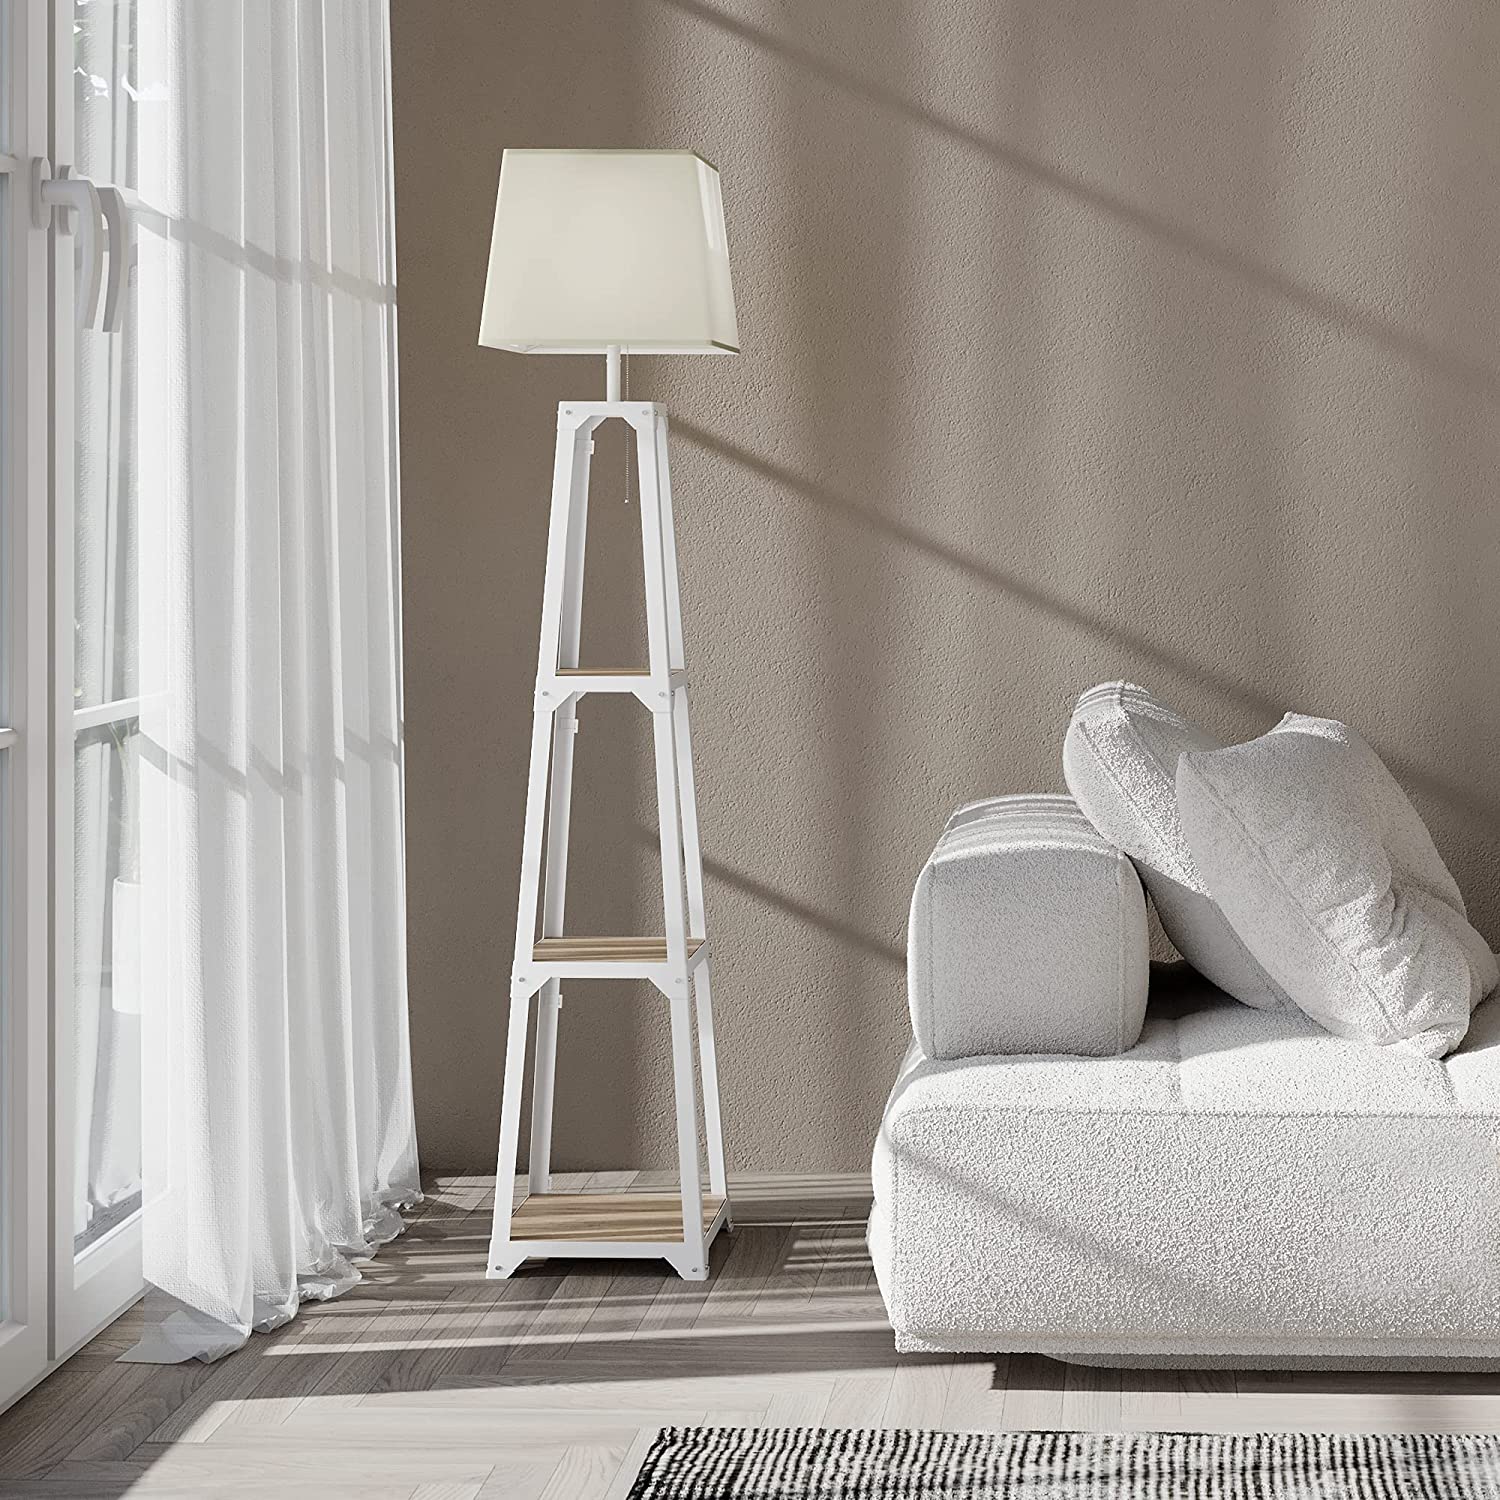 WAMPAT Shelf Floor Lamp Modern Standing Light for Living Rooms Bedrooms Metal Frame with Open Box Display Shelves, White